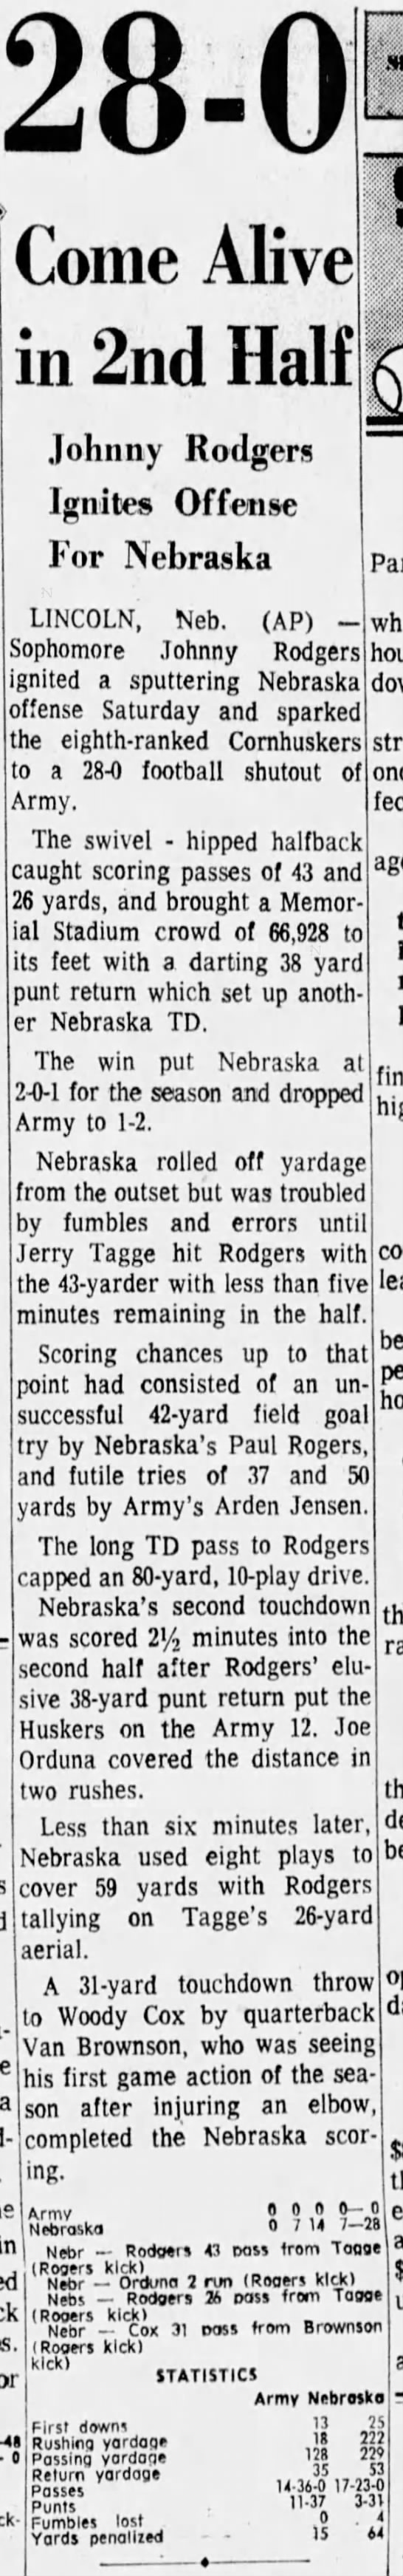 1970 Army-Nebraska football AP - 